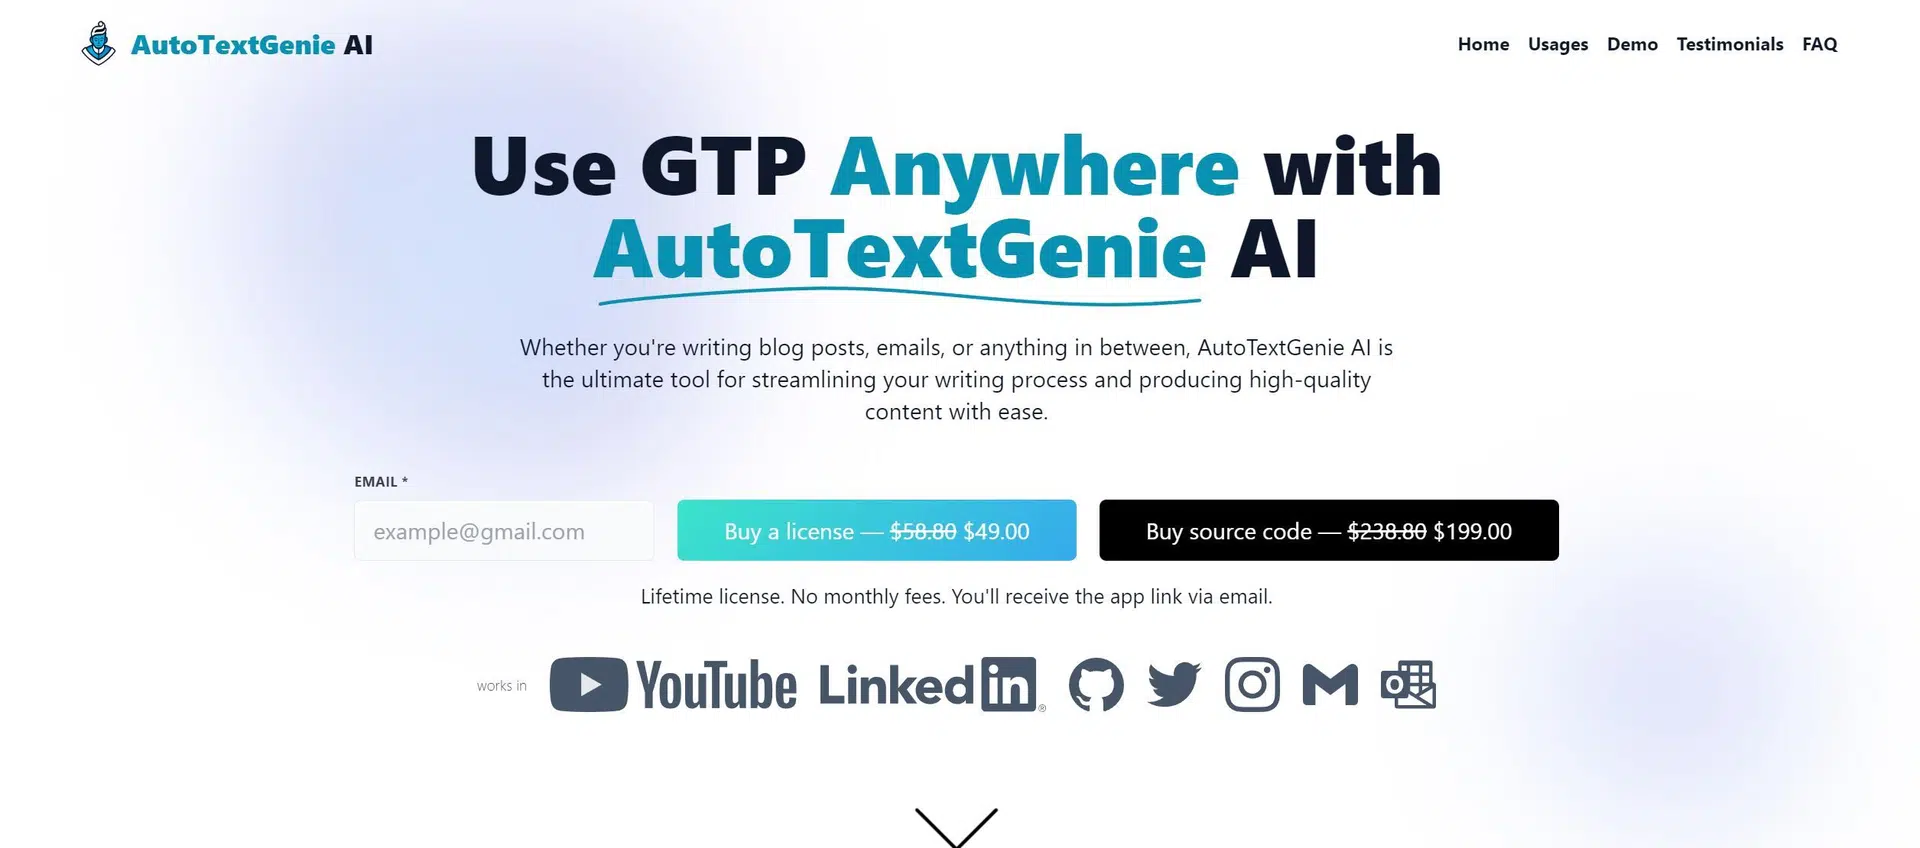 AutoTextGenie AIwebsite picture